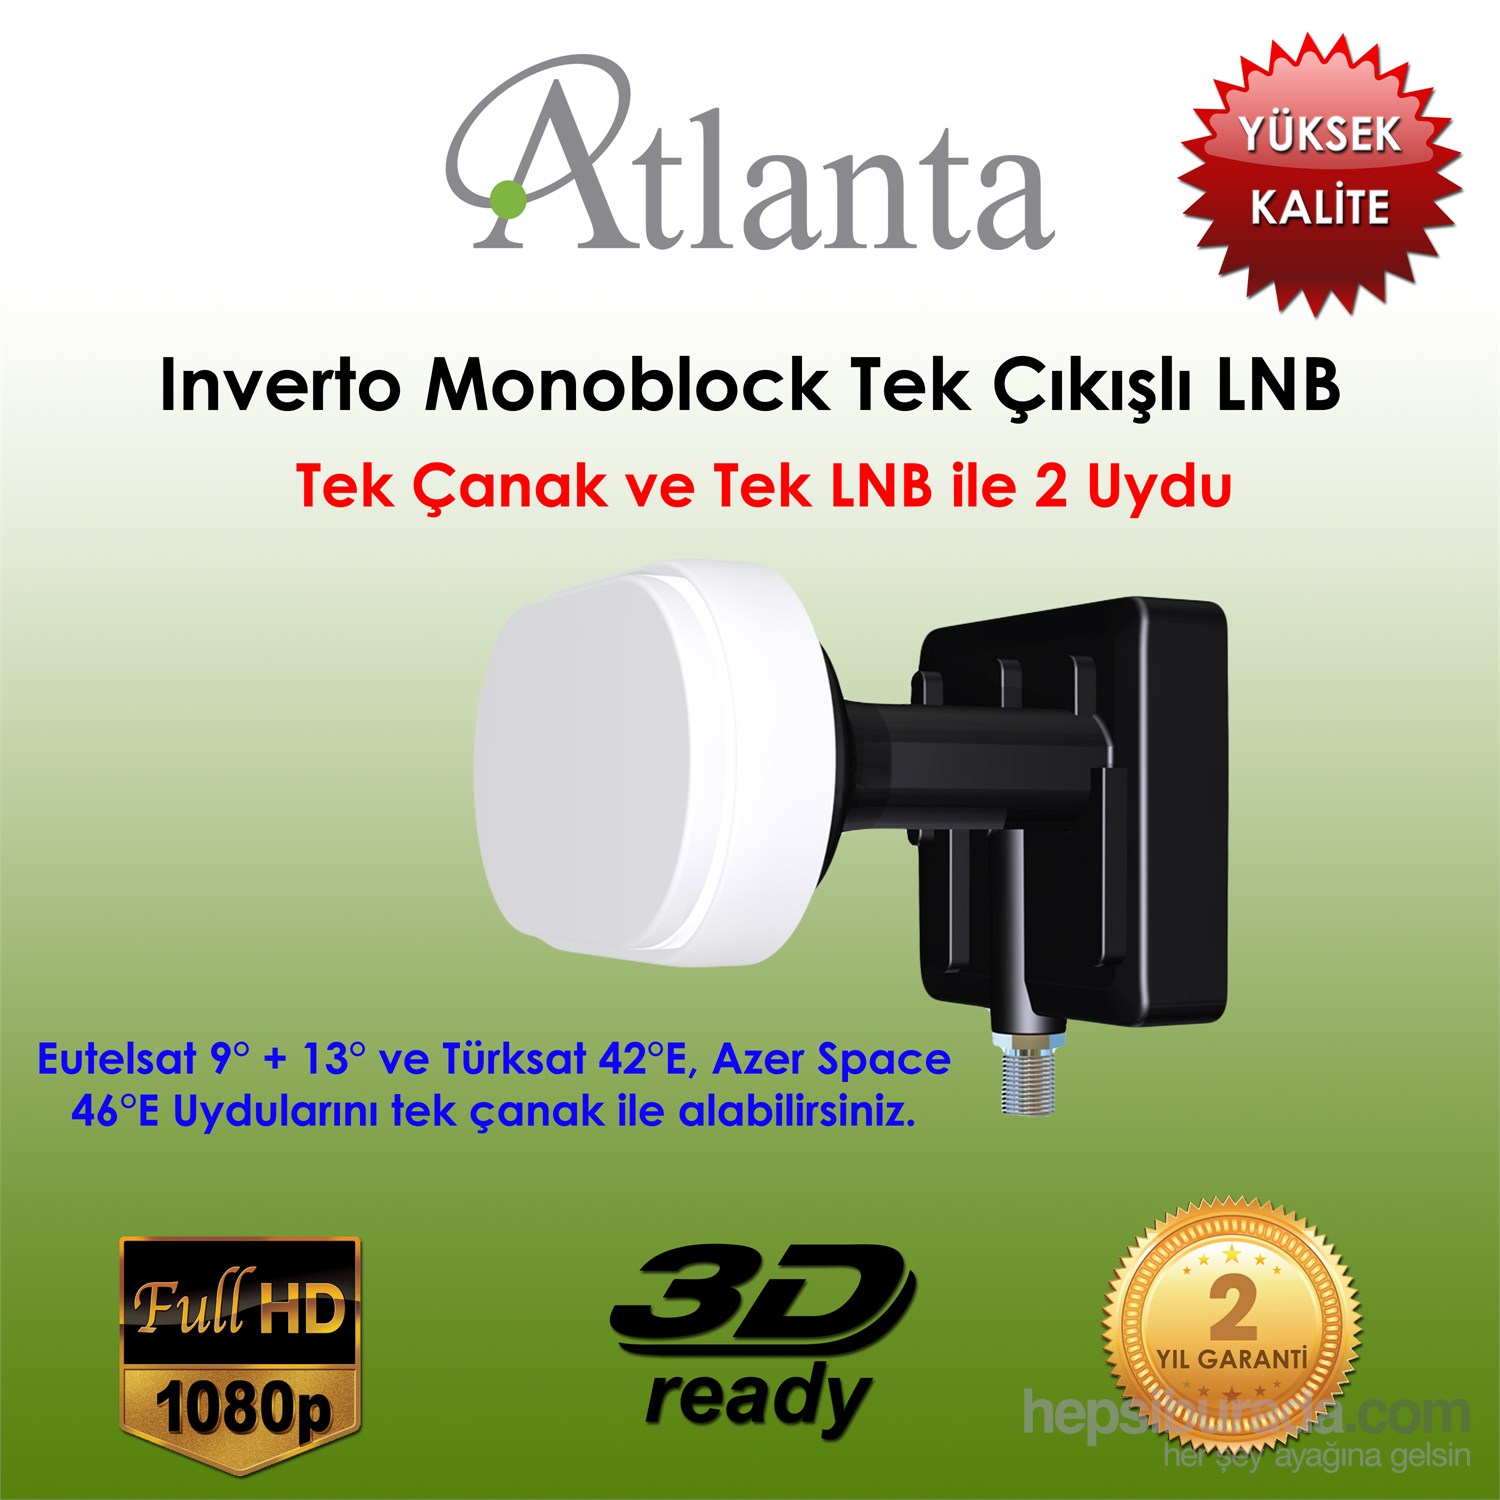 Atlanta Inverto Monoblock Lnb